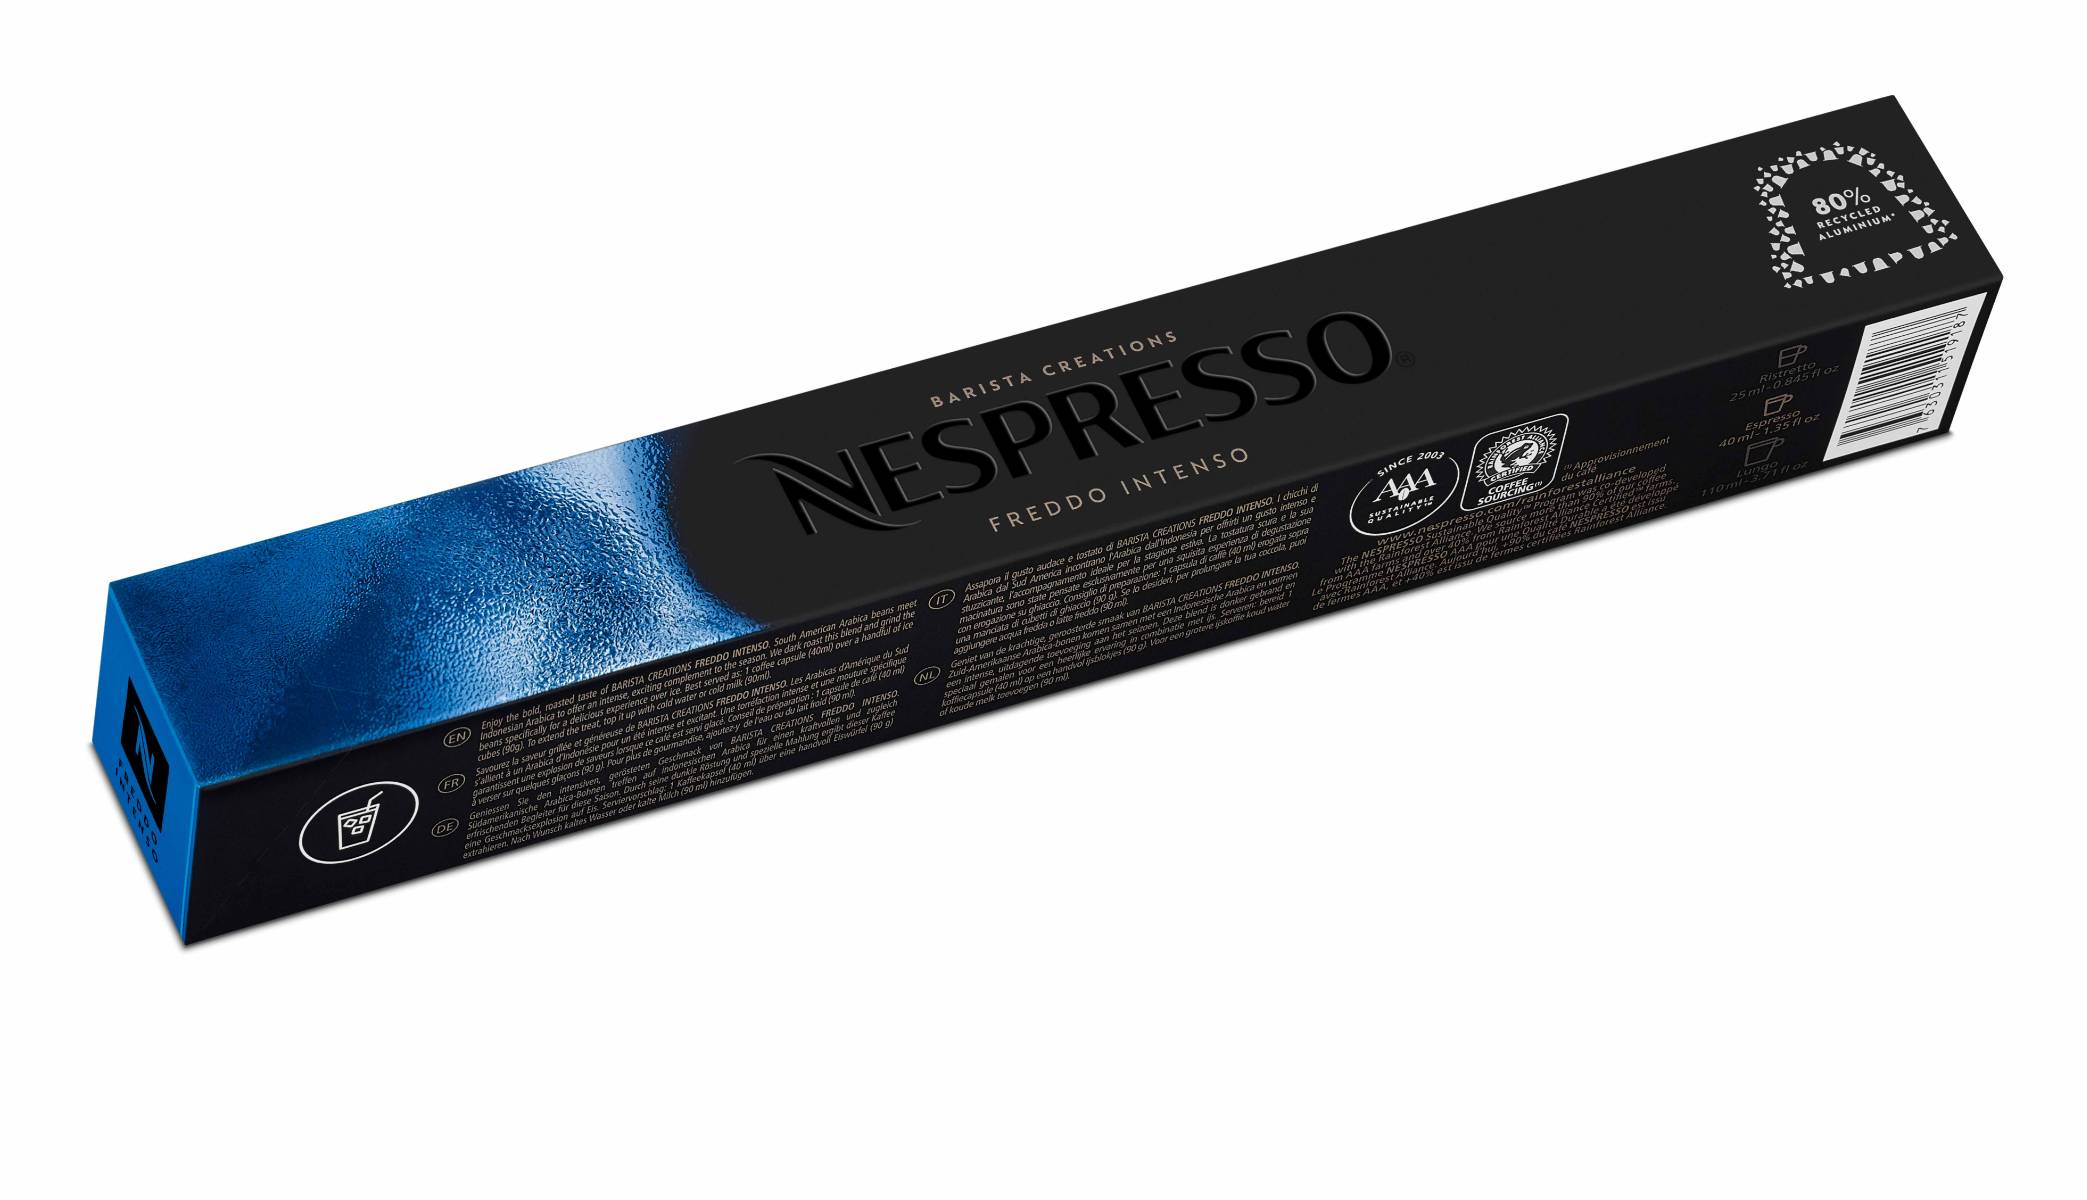 A sleeve of the Nespresso Freddo Intenso.